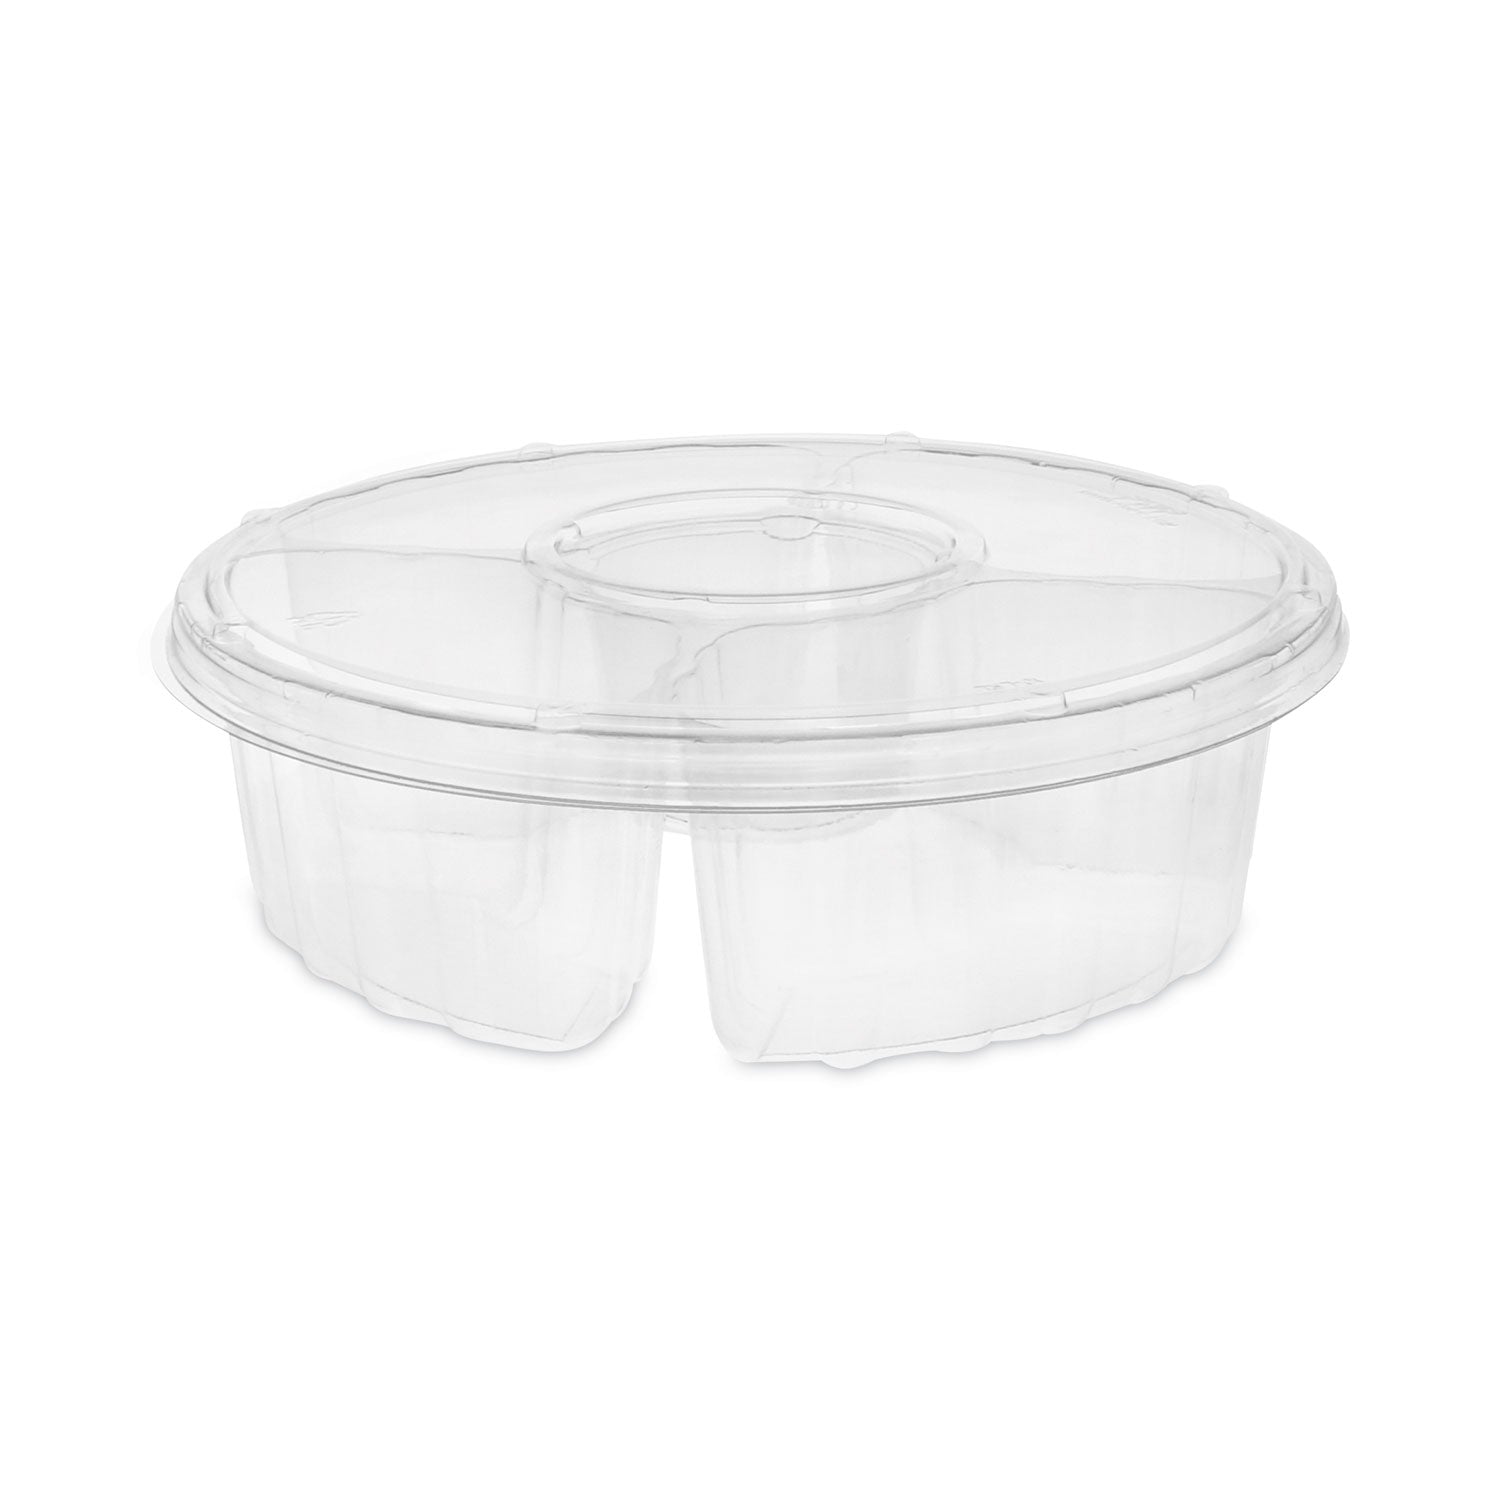 dip-cup-platter-4-compartment-64-oz-10-diameter-clear-plastic-100-carton_pct1064dp4clrl - 1